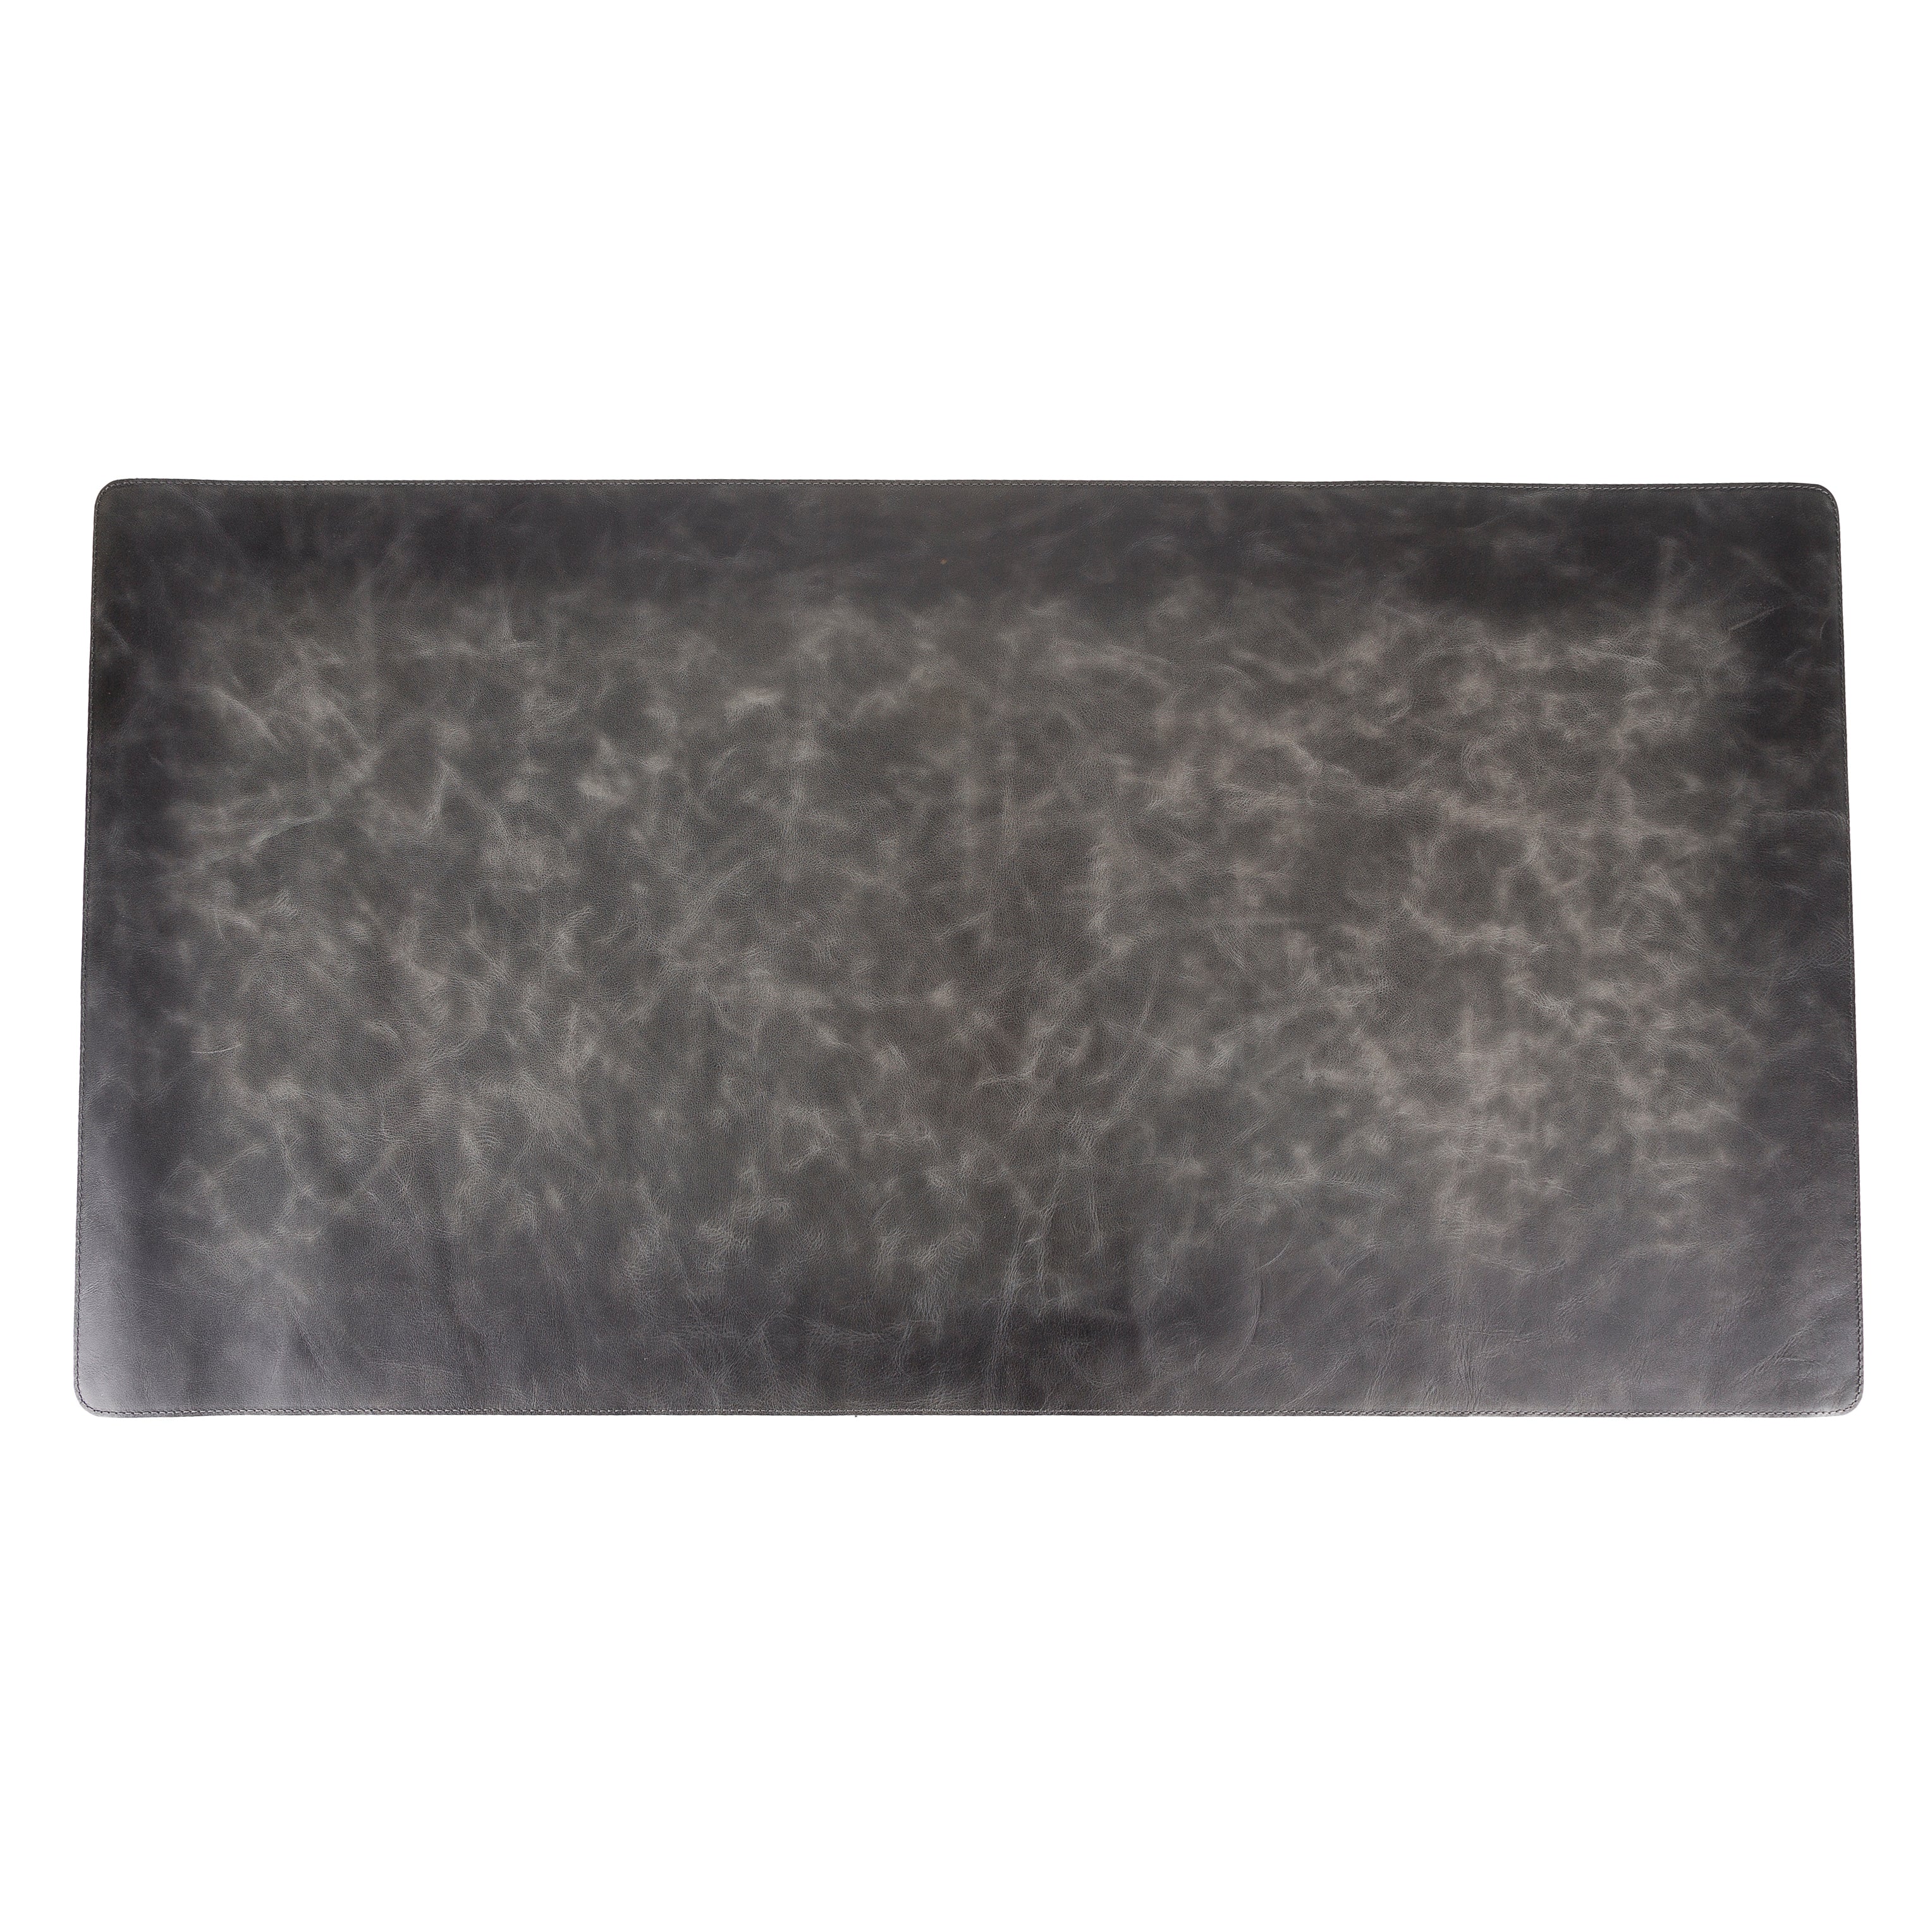 DelfiCase Genuine Grey Leather Deskmat, Computer Pad, Office Desk Pad 4